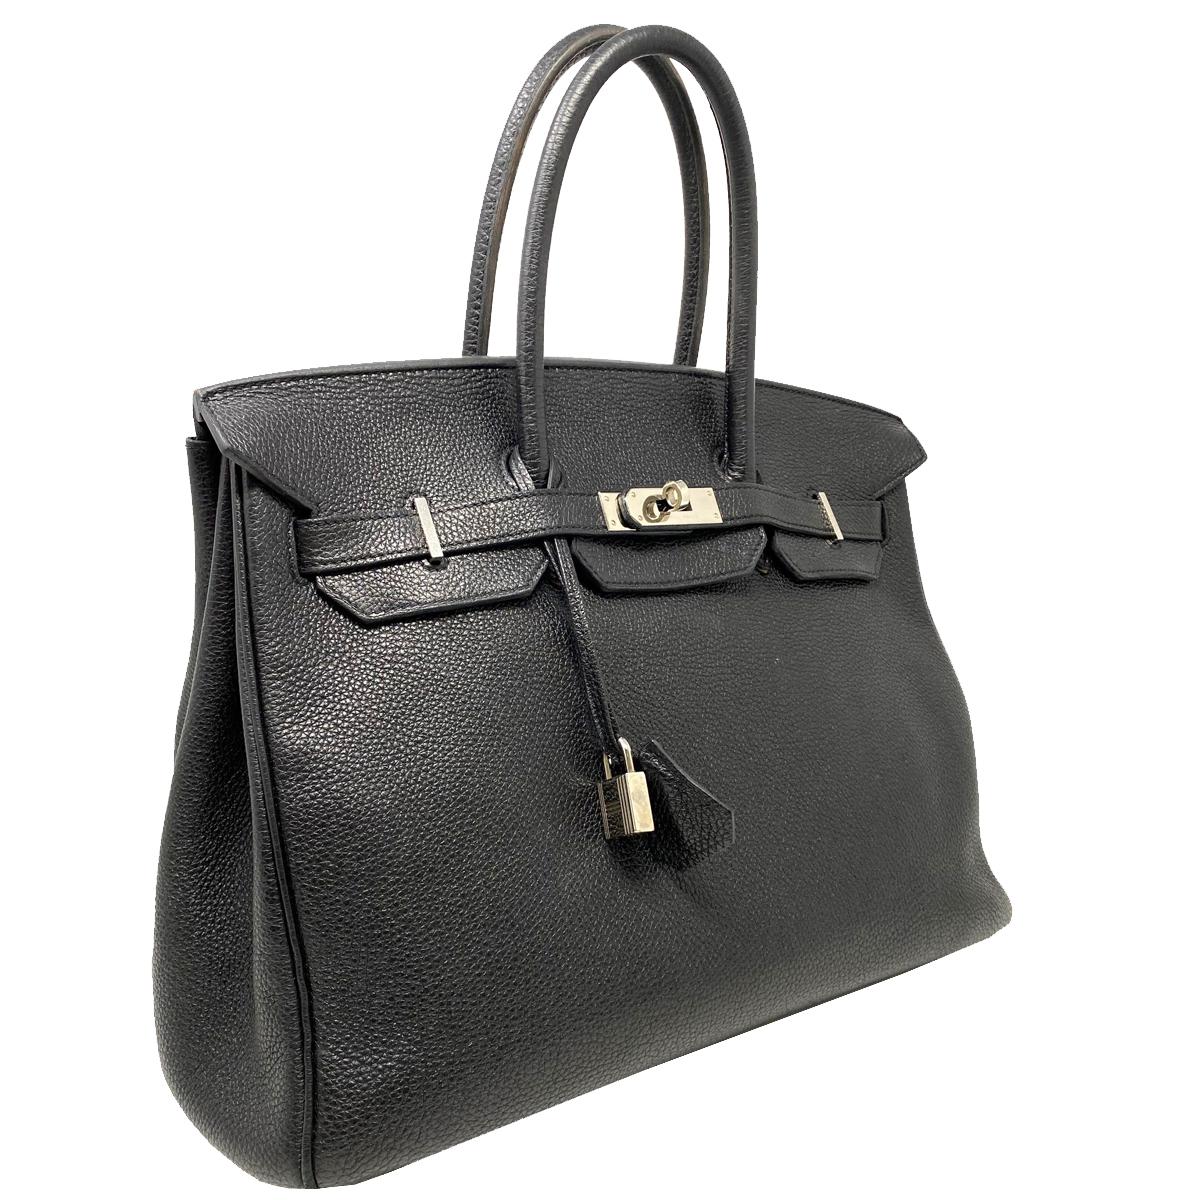 hermes birkin bag 35 togo black women's handbag